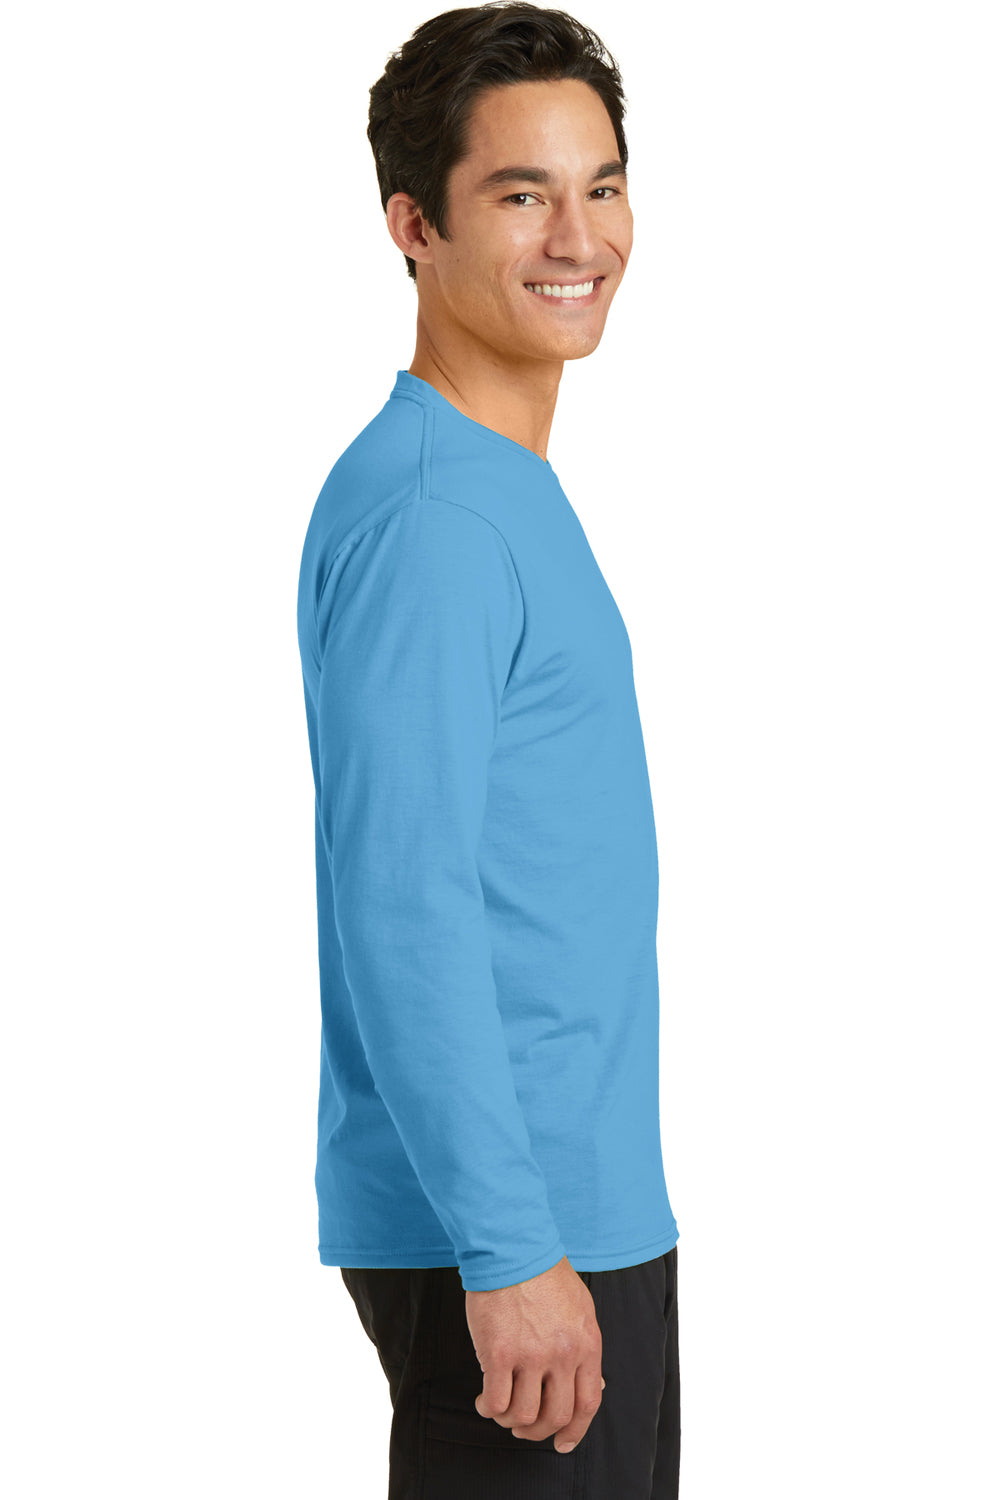 Port & Company PC381LS Mens Dry Zone Performance Moisture Wicking Long Sleeve Crewneck T-Shirt Aqua Blue Side